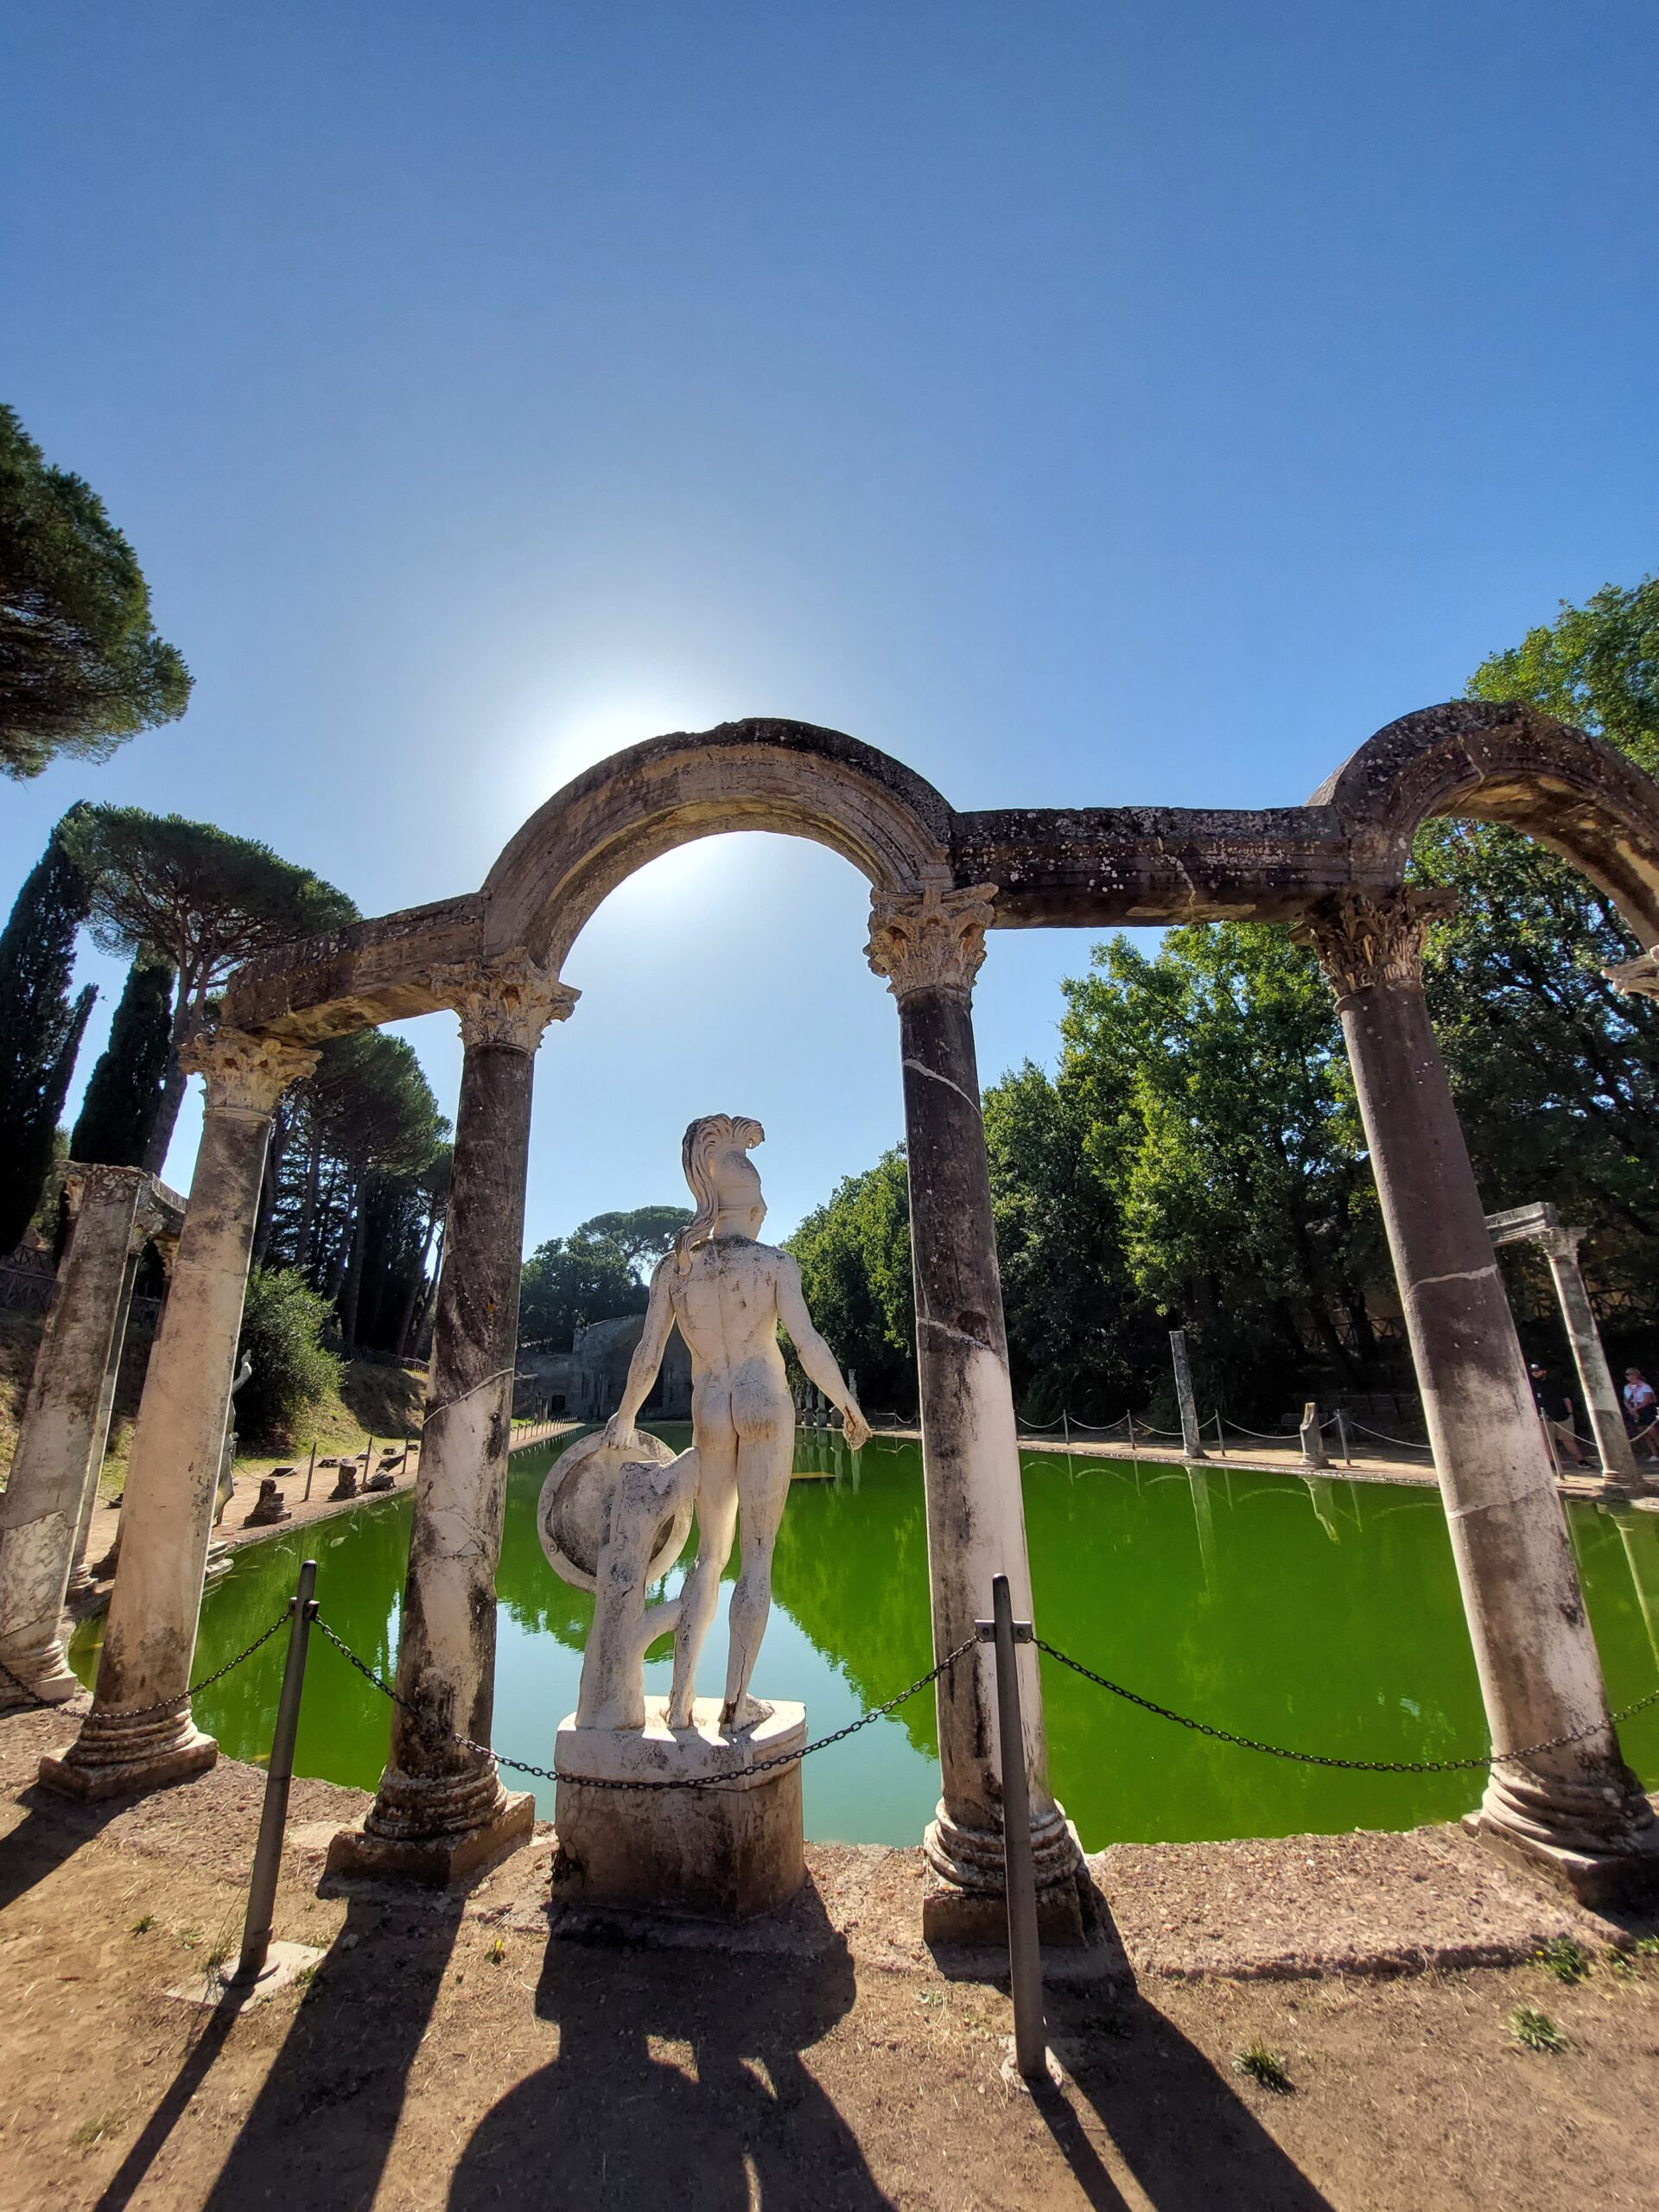 Villa Adriana - Tivoli - Art Club - Associazione culturale - Visite guidate a Roma - Visite nel Lazio - Esperienze di Arte - Prossimamente - 2023